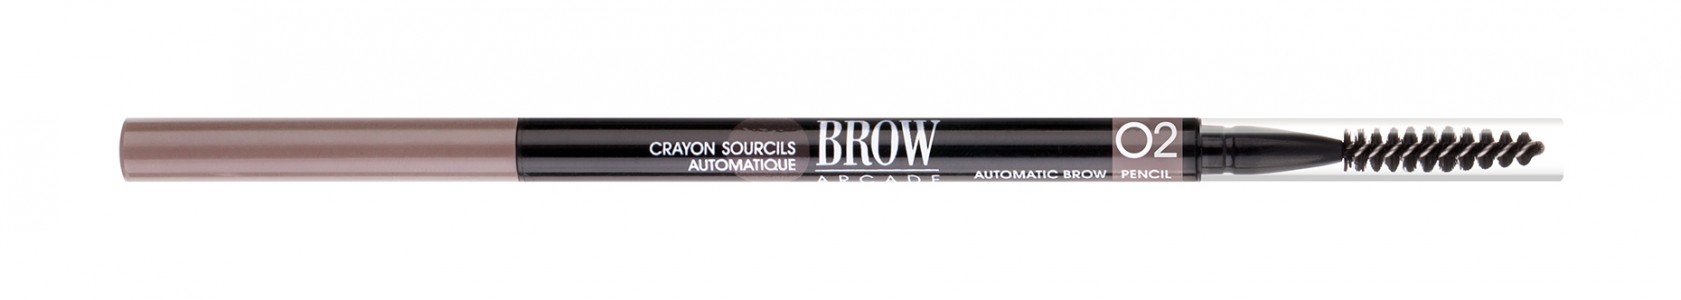 Карандаш для бровей Vivienne Sabo Brow Arcade Automatic Eyebrow Pencil 02 (Цвет 02 Коричневый variant_hex_name 8C6954) (6680)